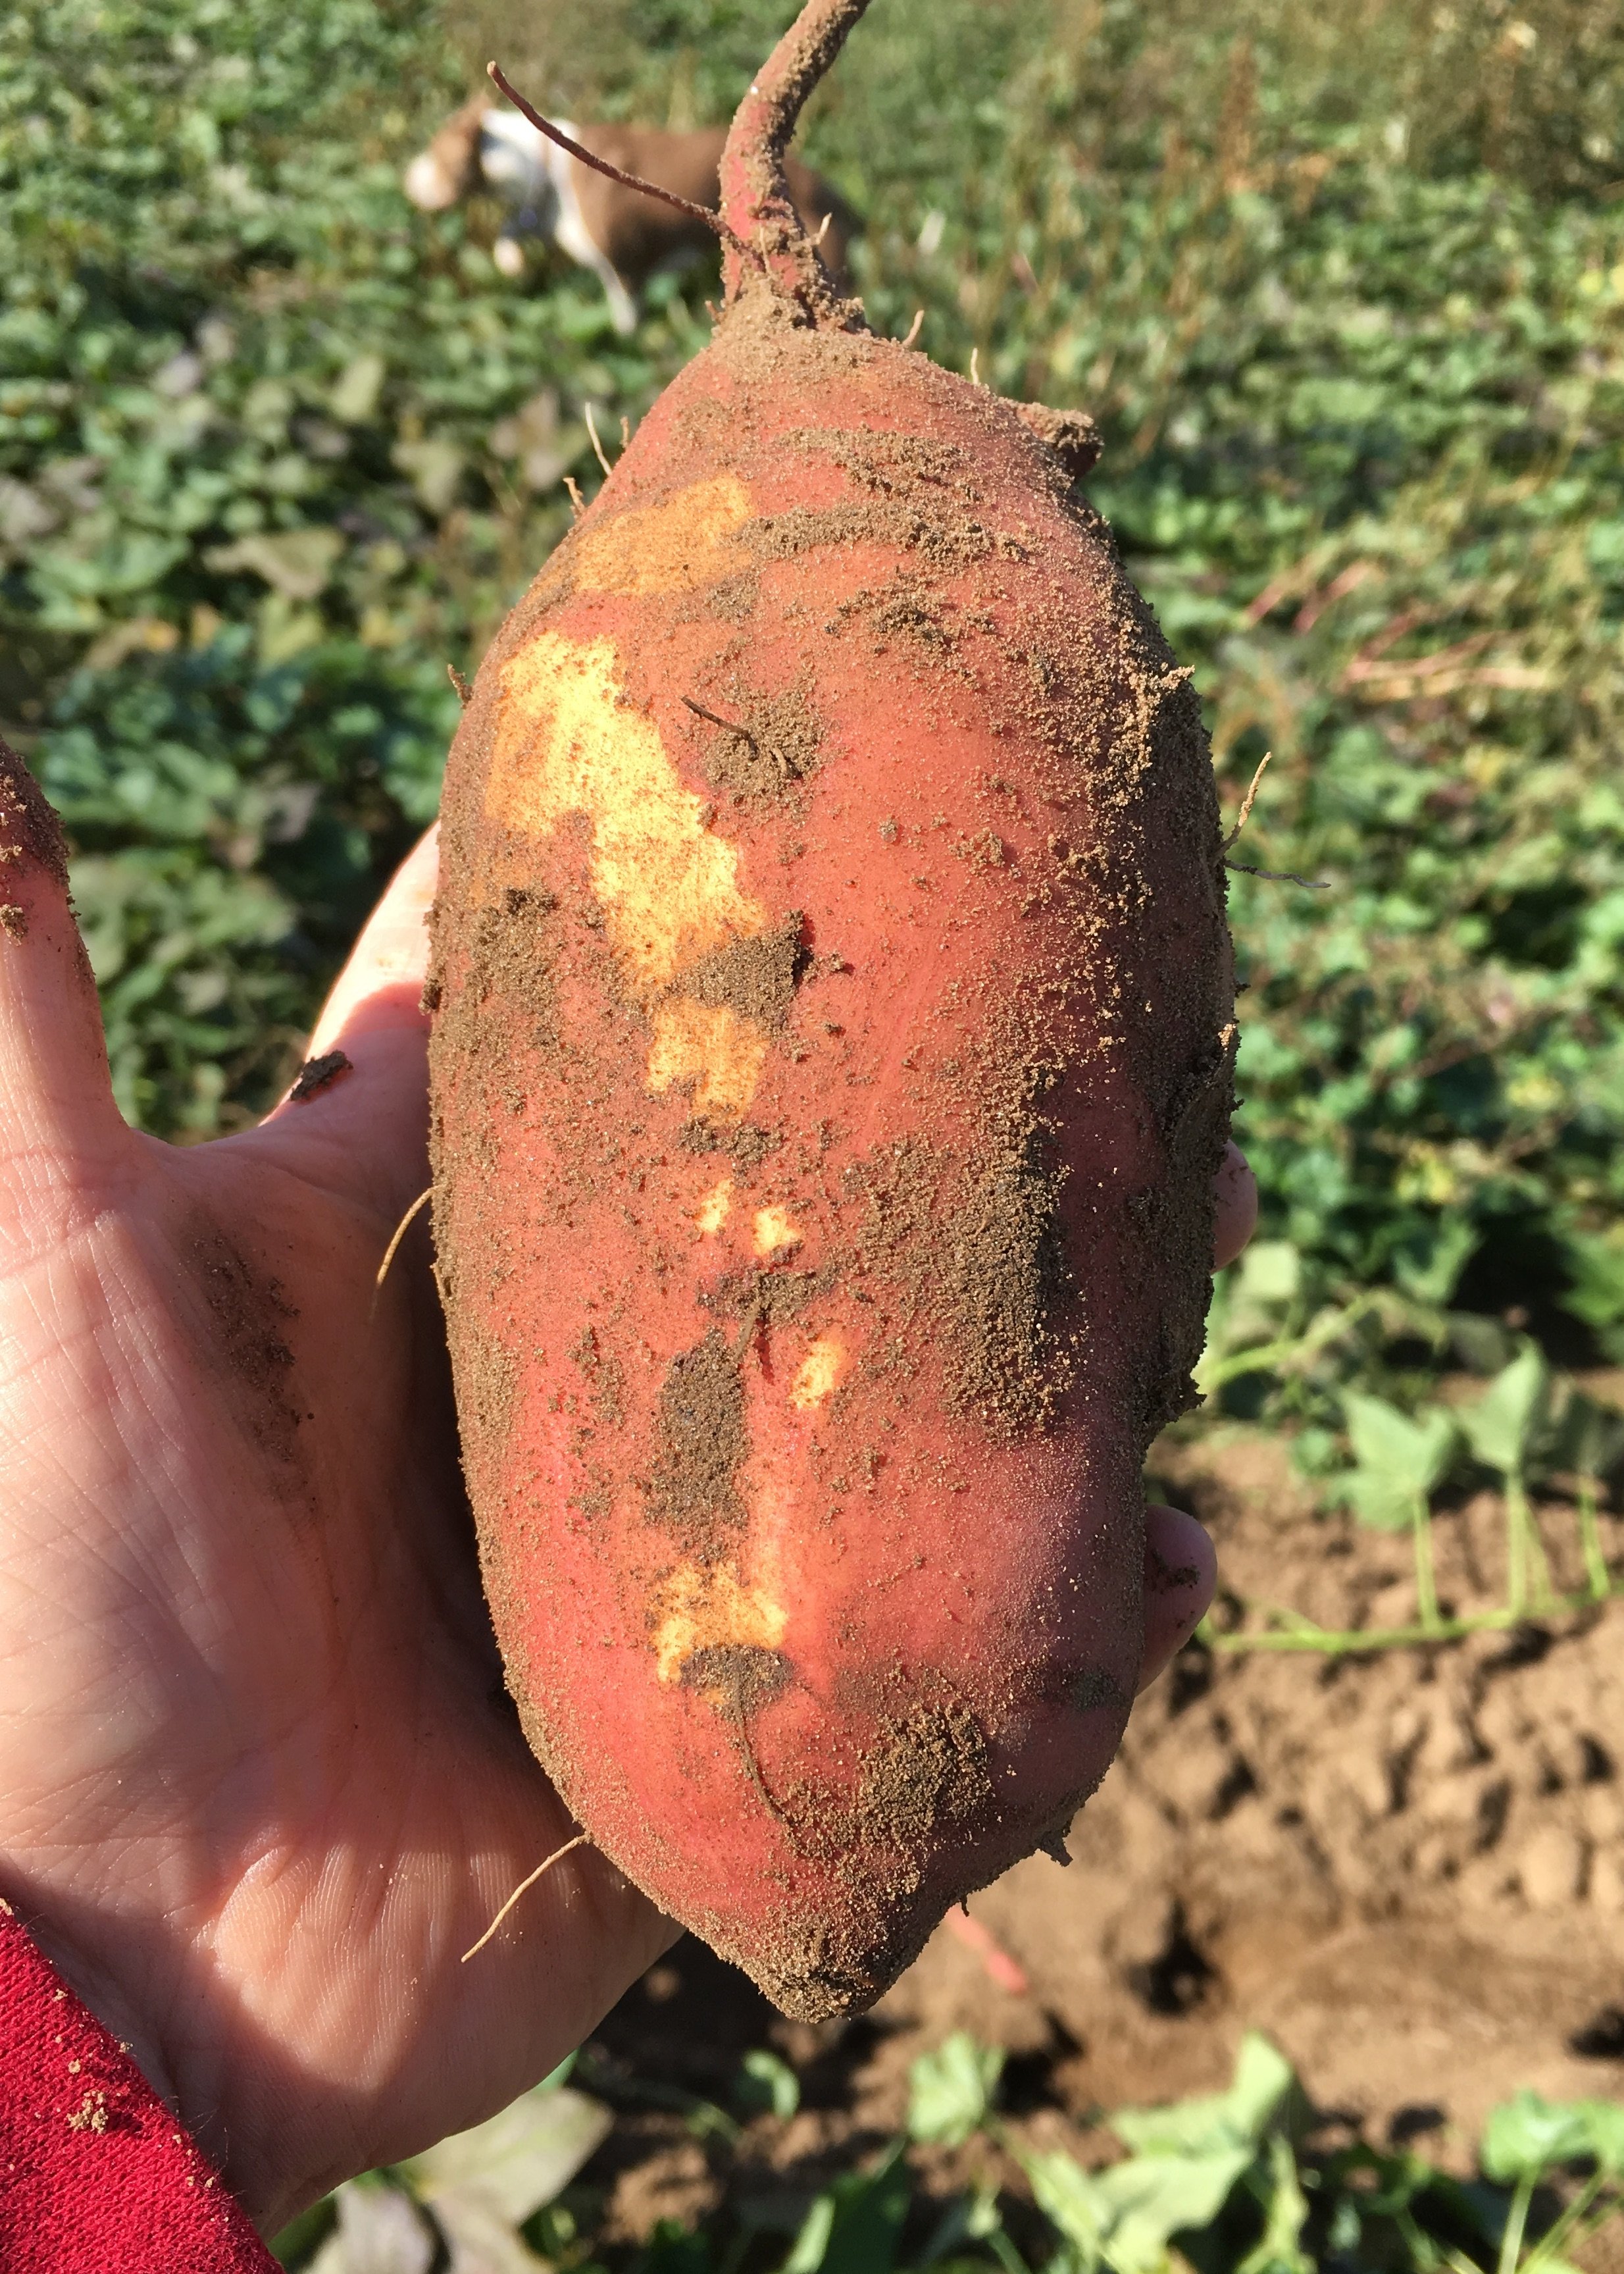 Next Happening: Cooper's CSA Farm Happenings week 17 Sweet Potatoes!!!